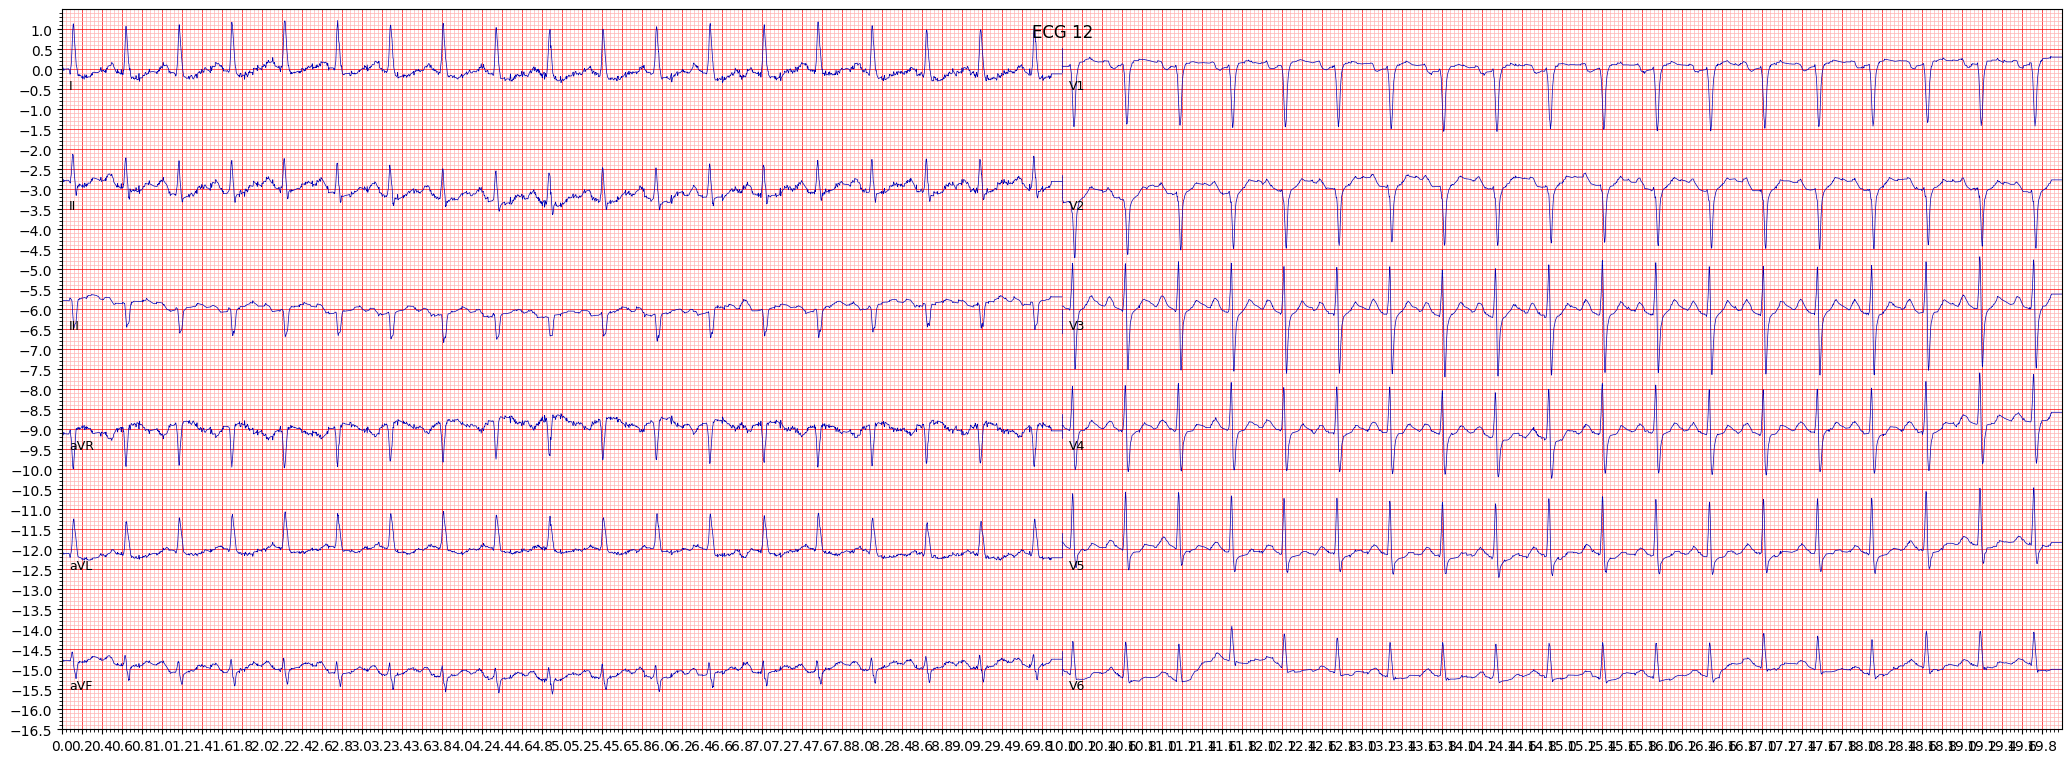 anterior myocardial infarction (AMI) example 3599